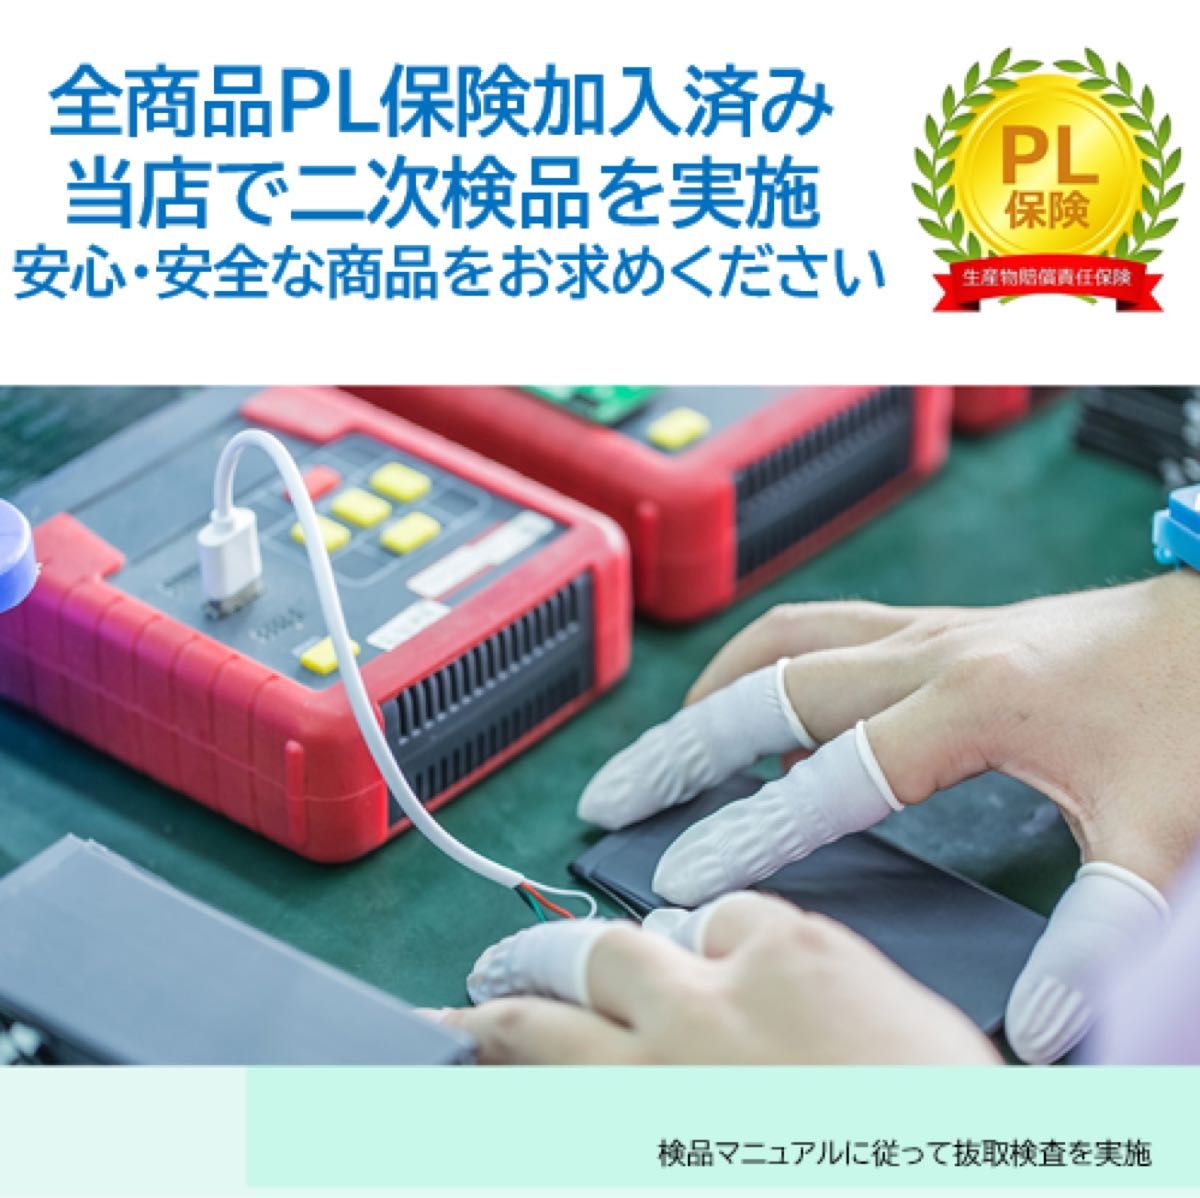 【新品】iPhoneX 大容量バッテリー 交換用 PSE認証済 工具・保証付